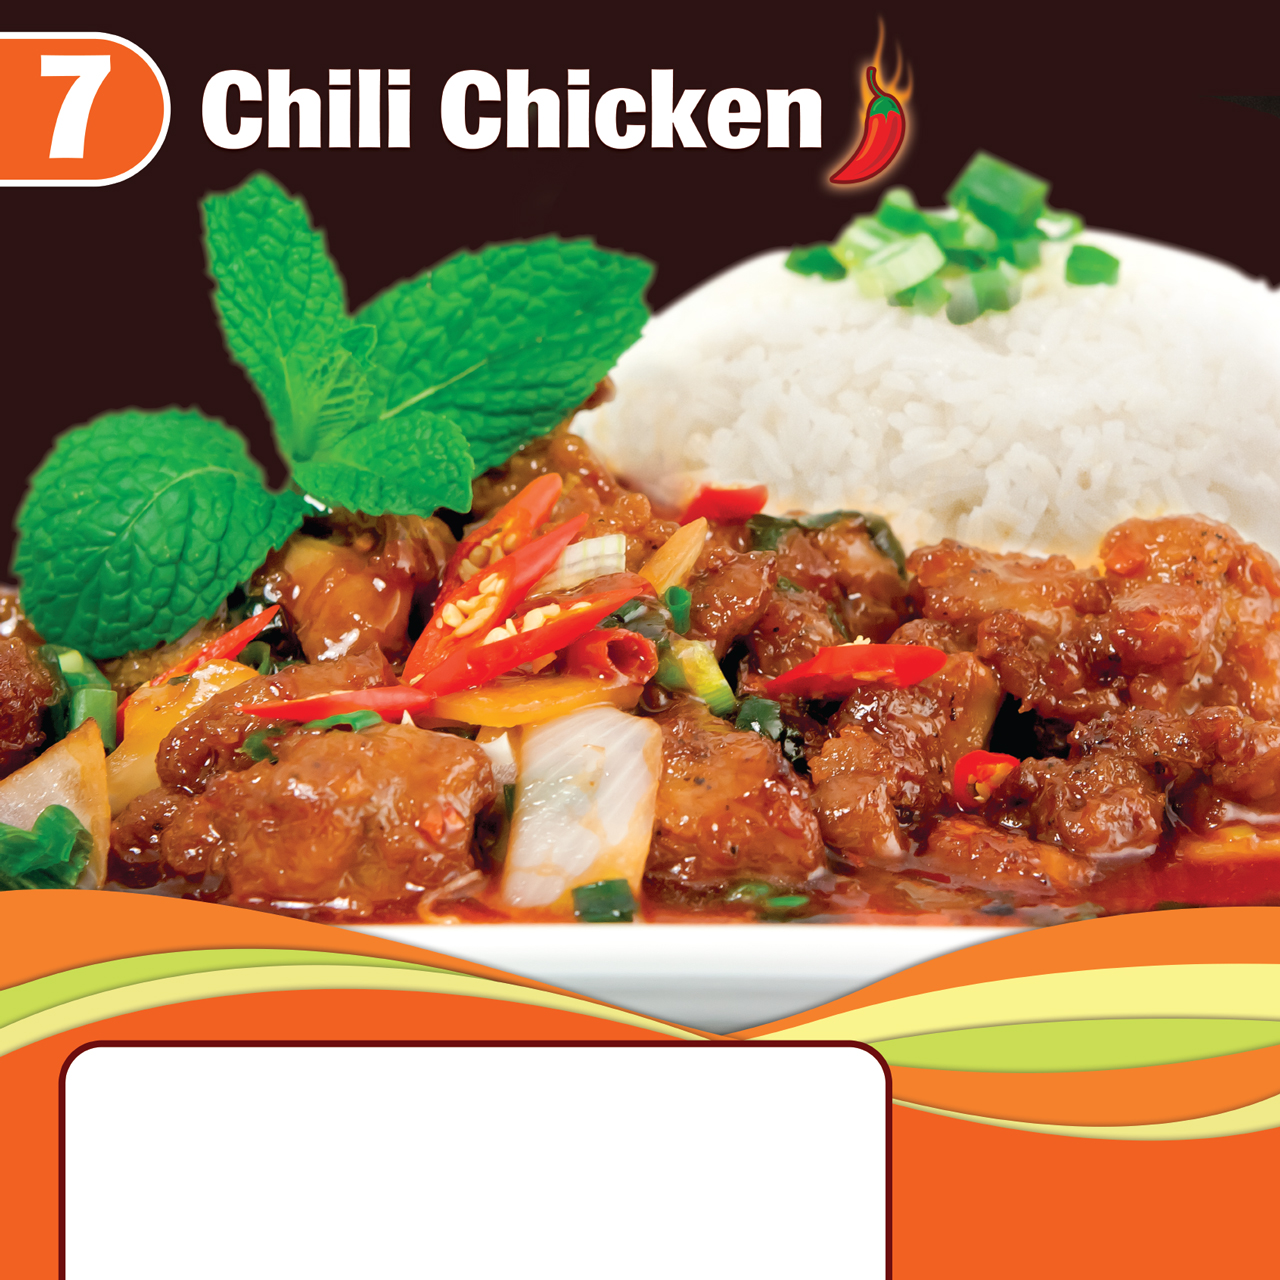 Chili Chicken